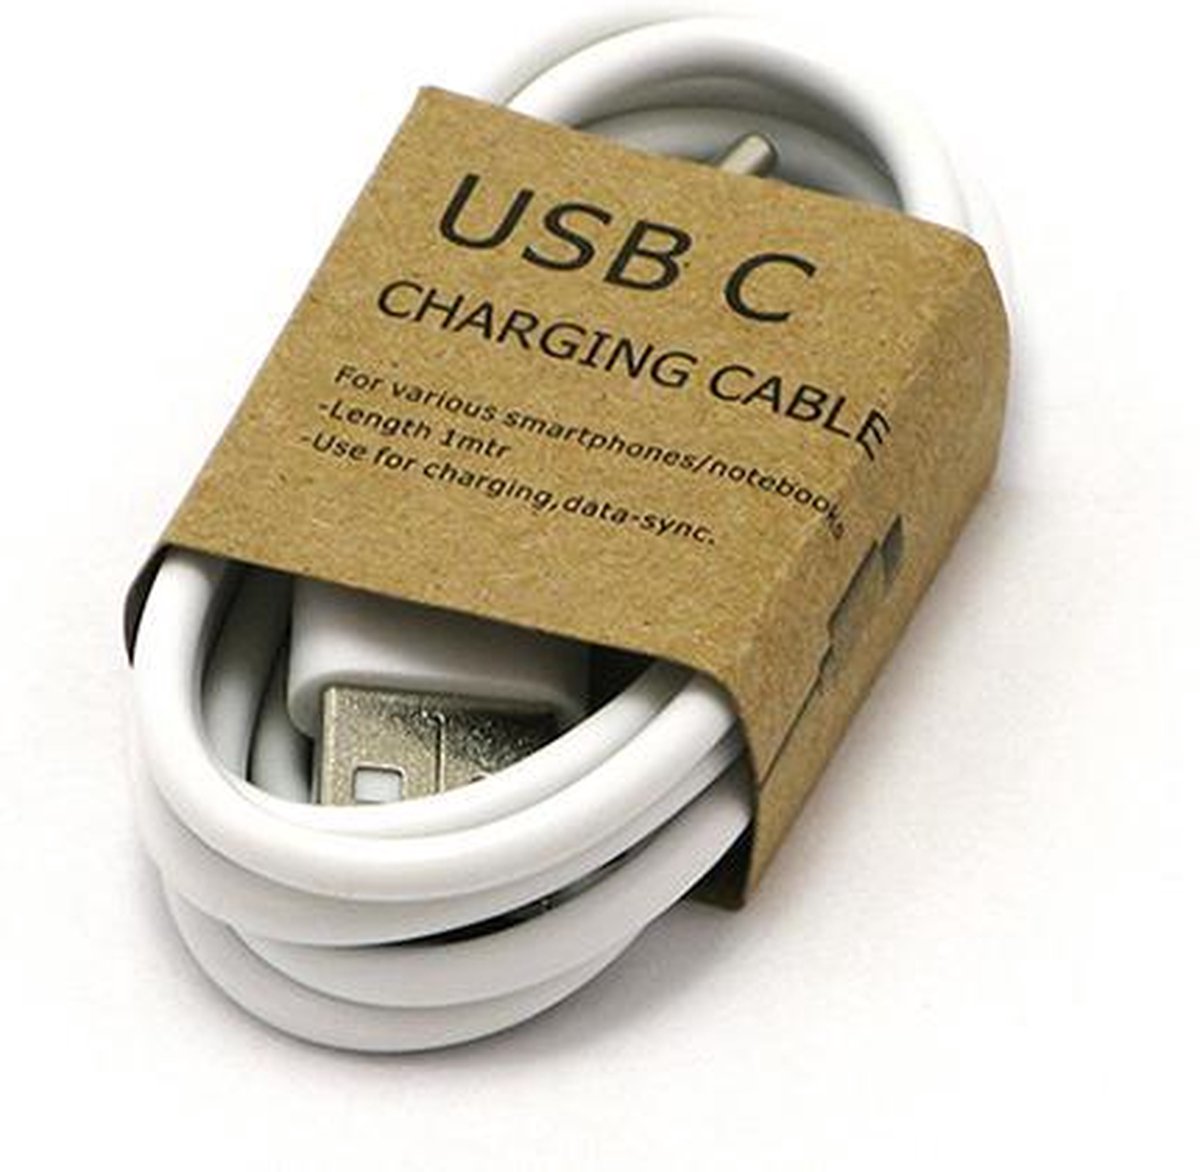 GrabNGo USB-C laadkabel wit - GrabNgo